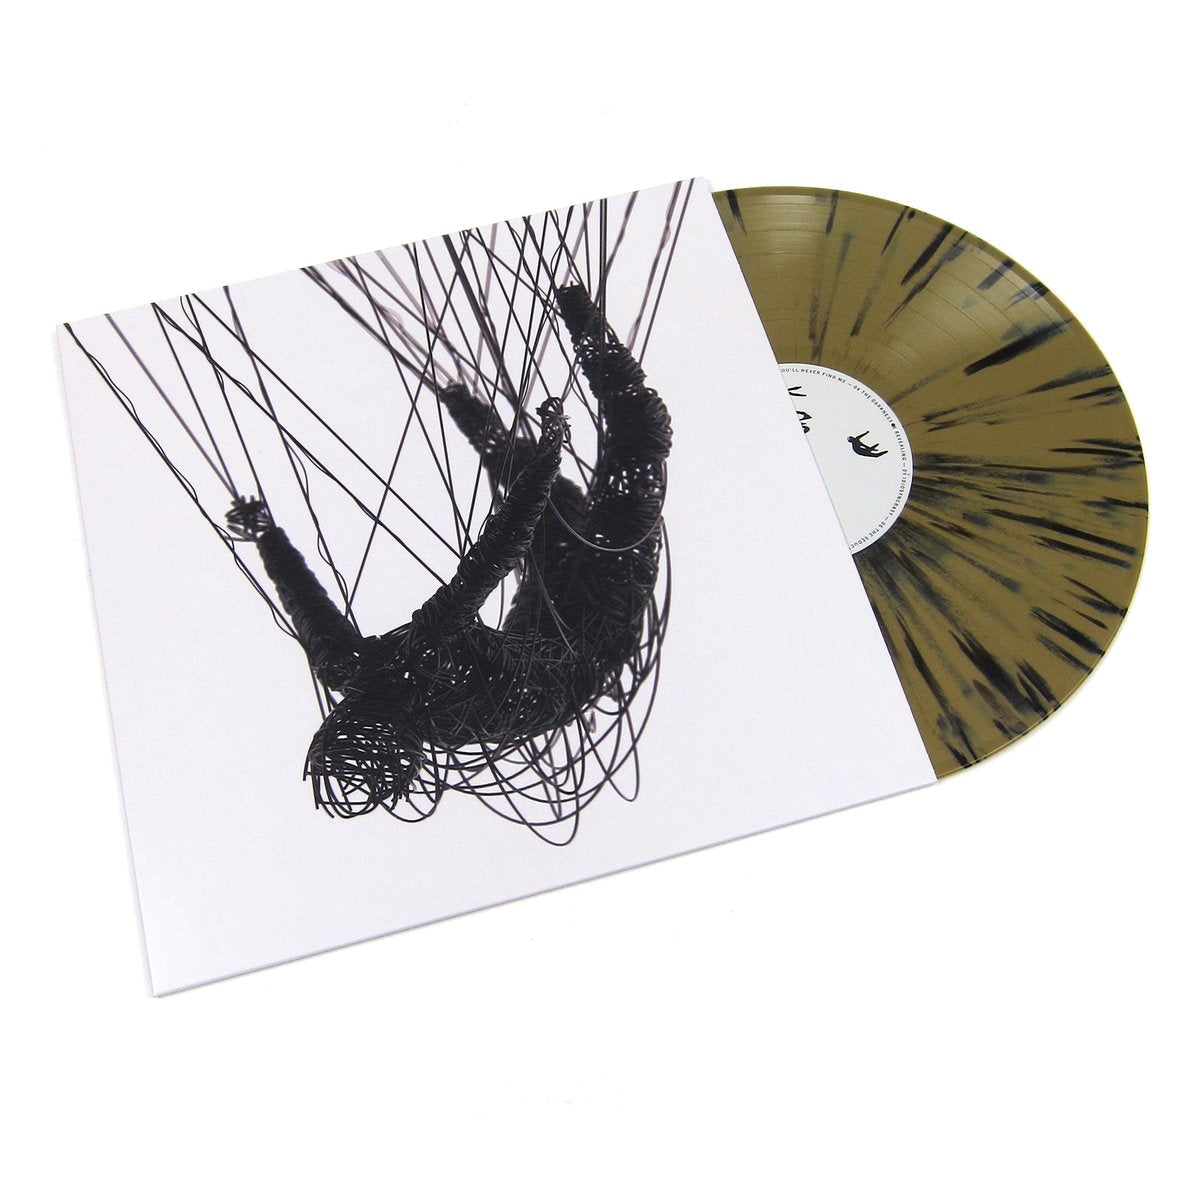 Korn - The Nothing (Ltd. Ed. Gold Splatter Vinyl) - Blind Tiger Record Club